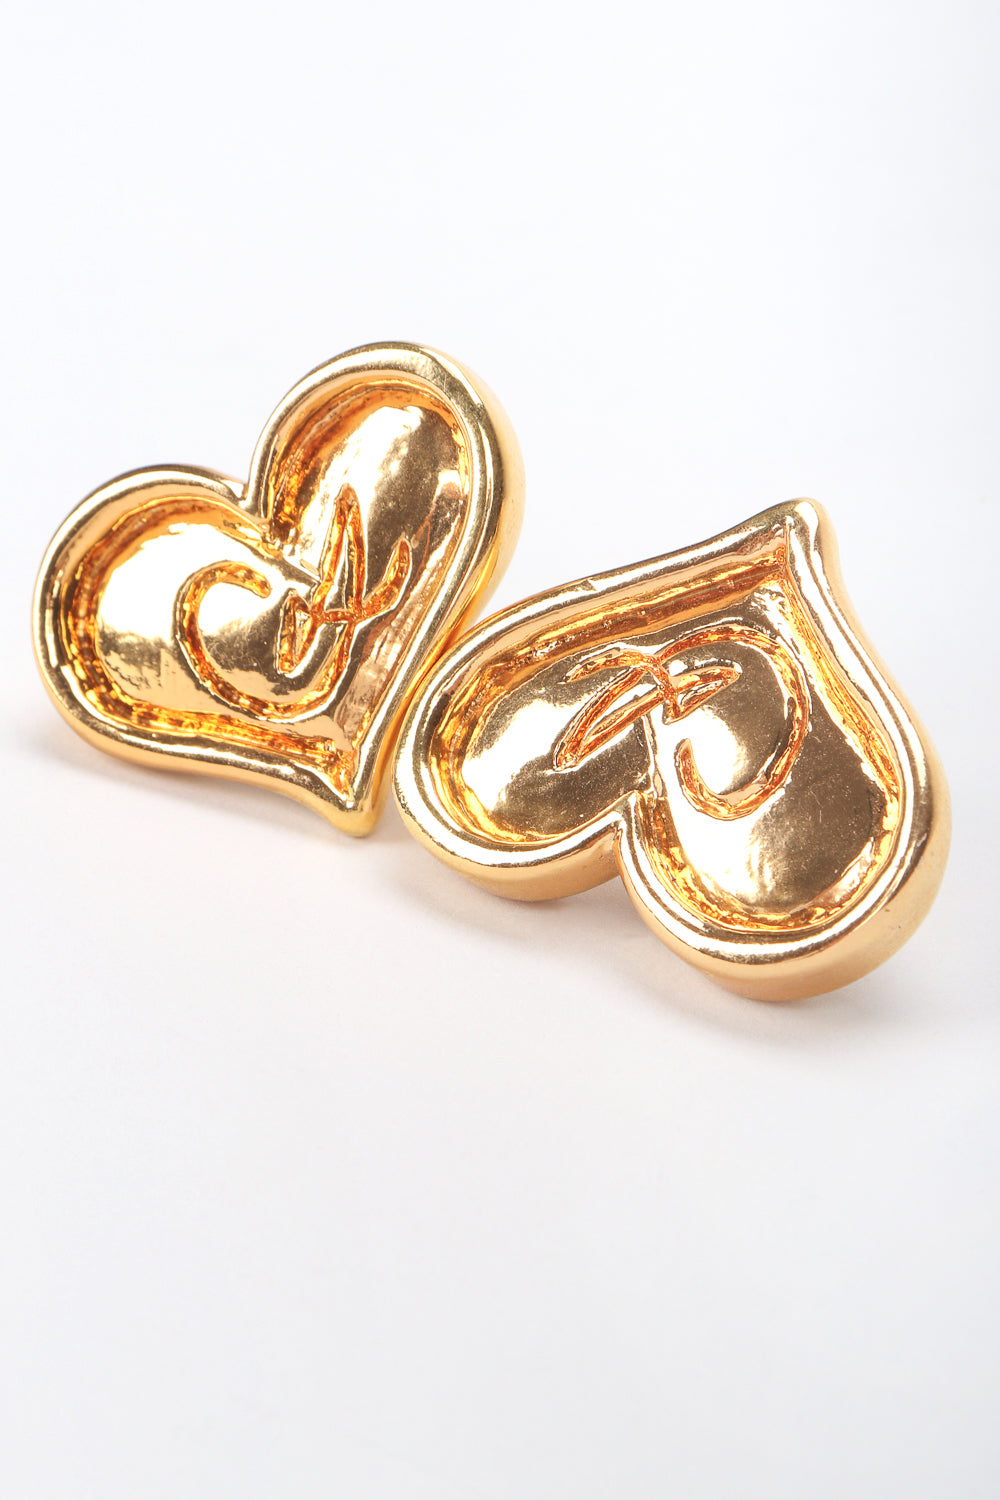 Recess Designer Consignment Vintage Christian Lacroix Logo Heart Button Earrings Los Angeles Resale